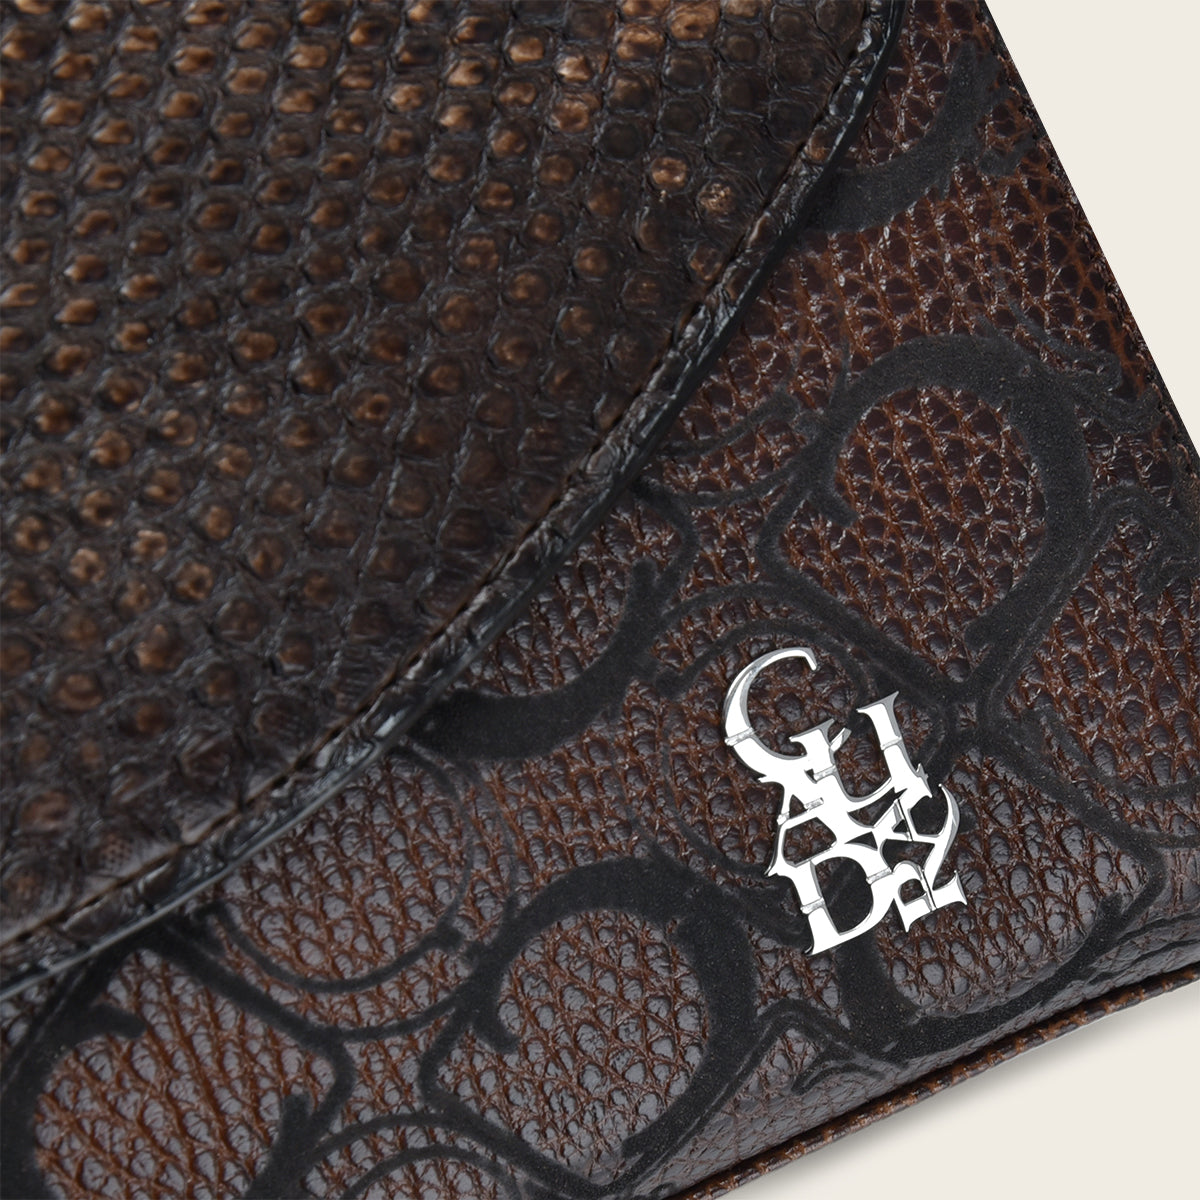 Dark brown exotic leather handbag with Cuadra Monogram leather